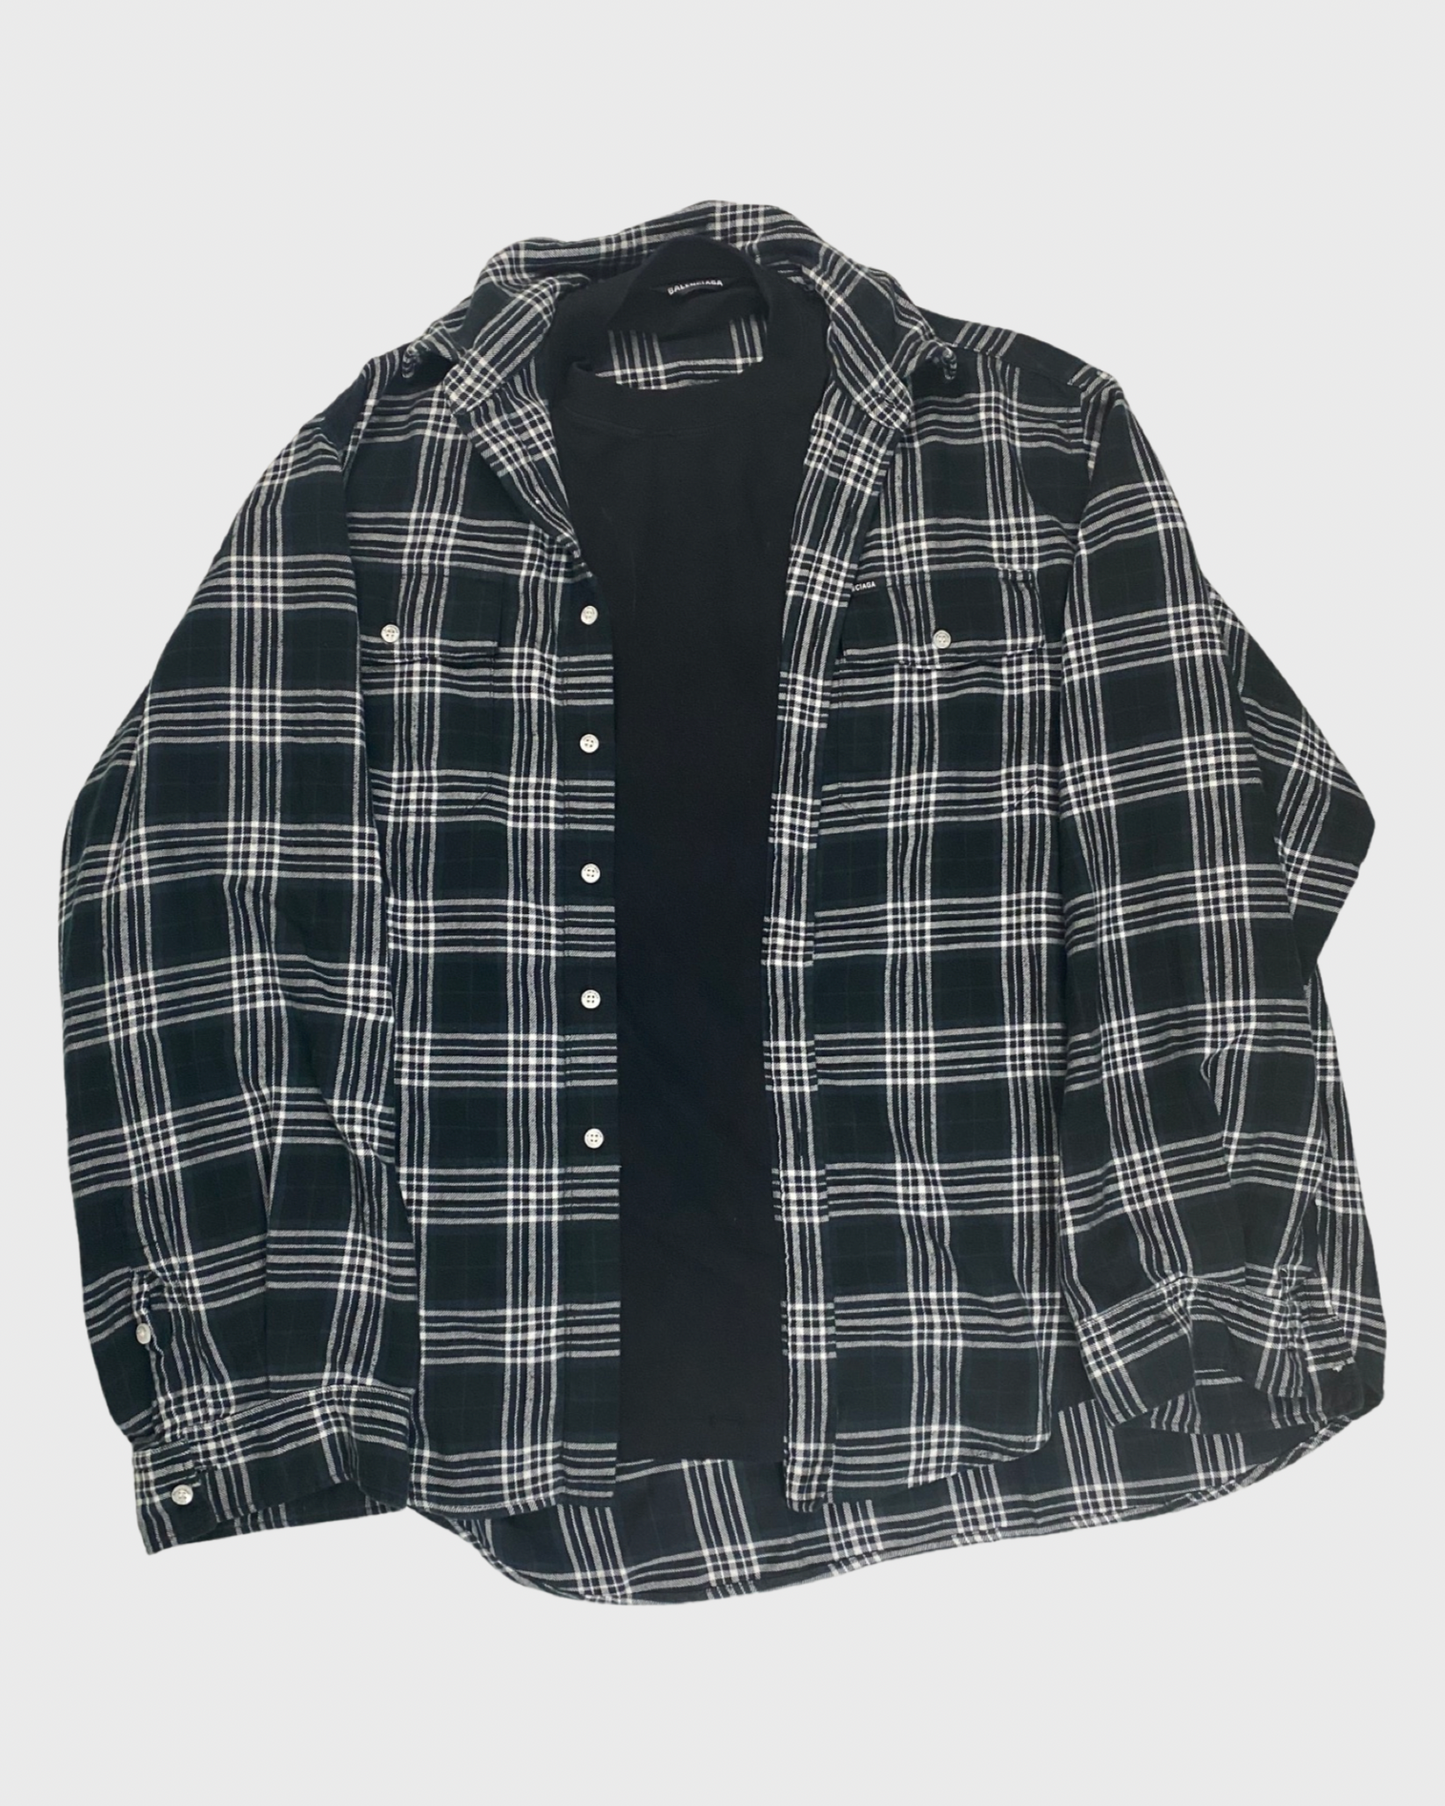 Balenciaga oversized trompe l’oeil tshirt flannel shirt SZ:1